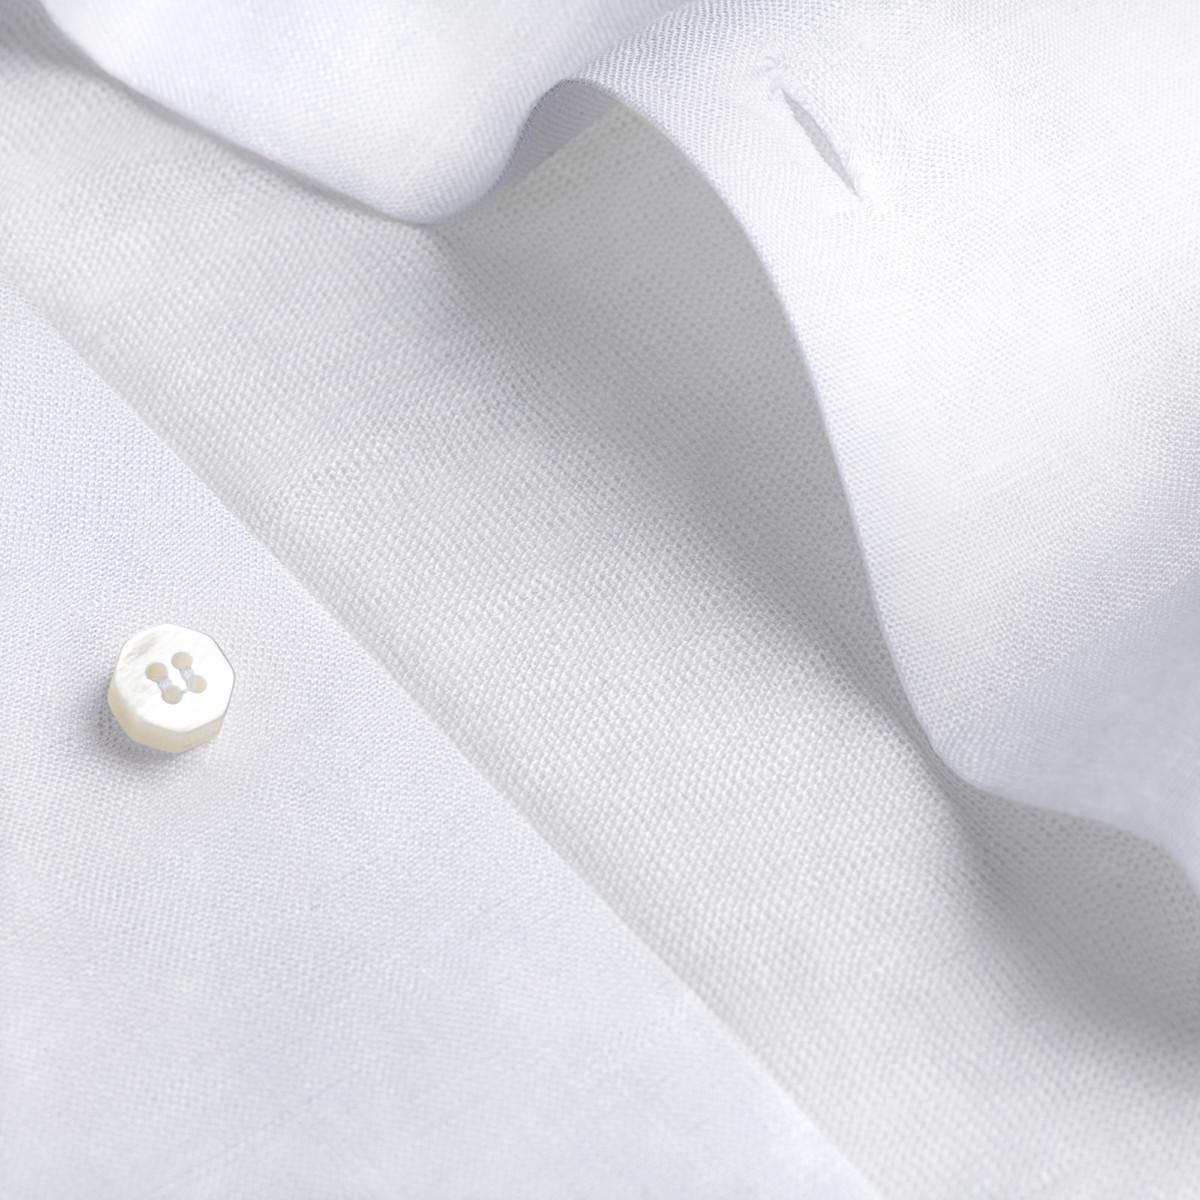 Camicia Mykonos 100% Capri white linen shirt detail